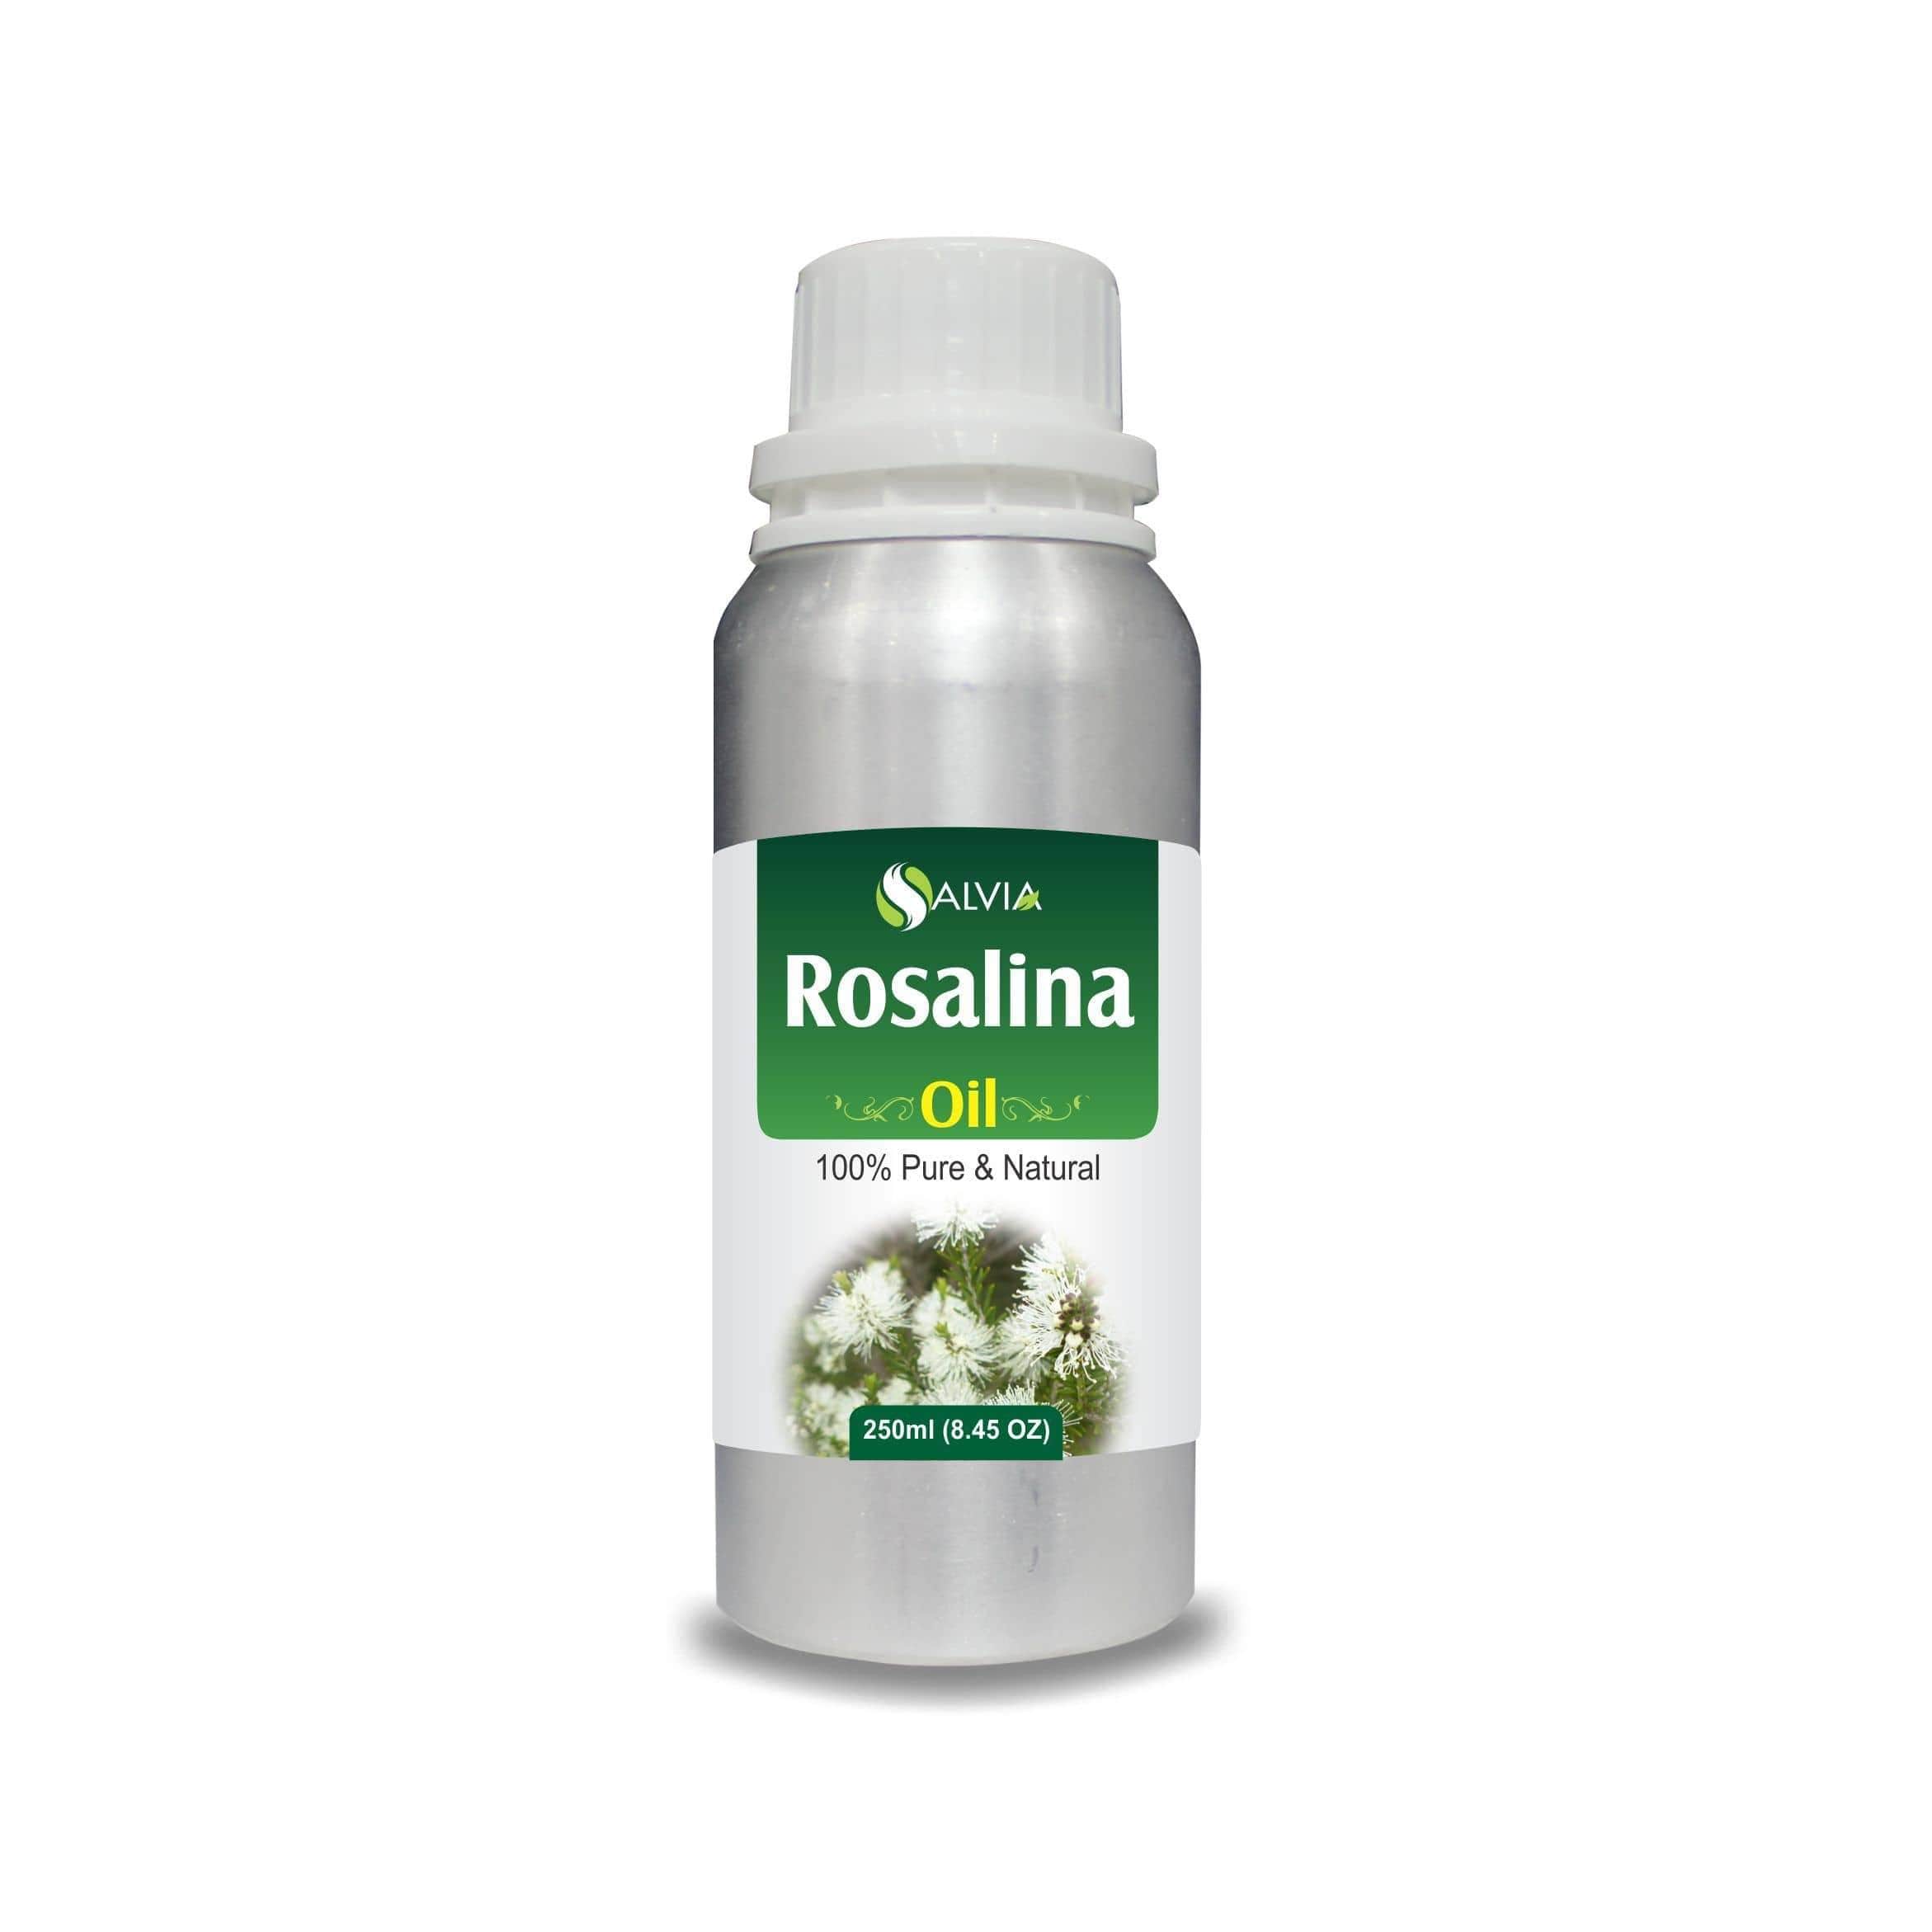 rosalina oil